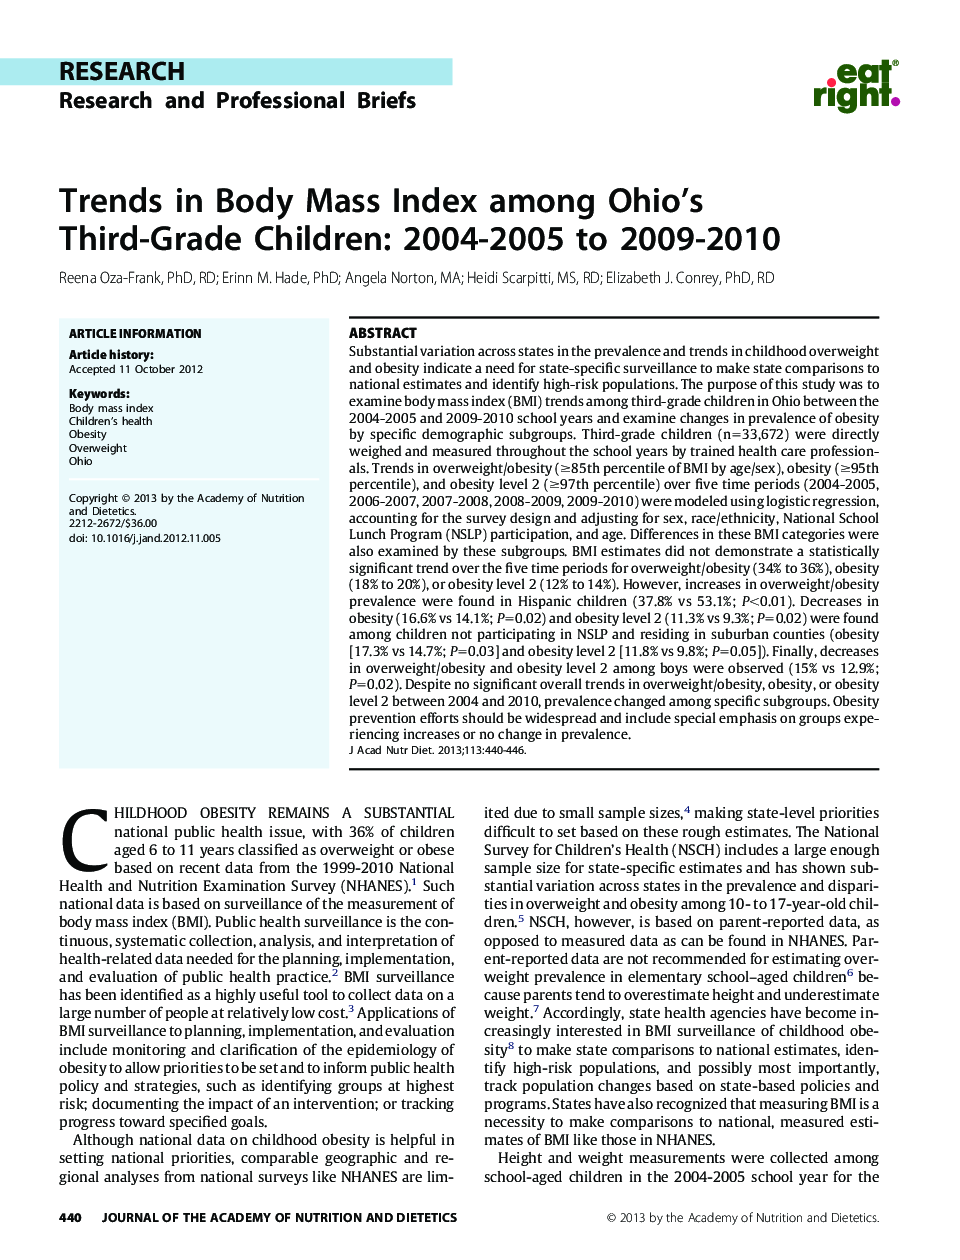 Trends in Body Mass Index among Ohio's Third-Grade Children: 2004-2005 to 2009-2010 